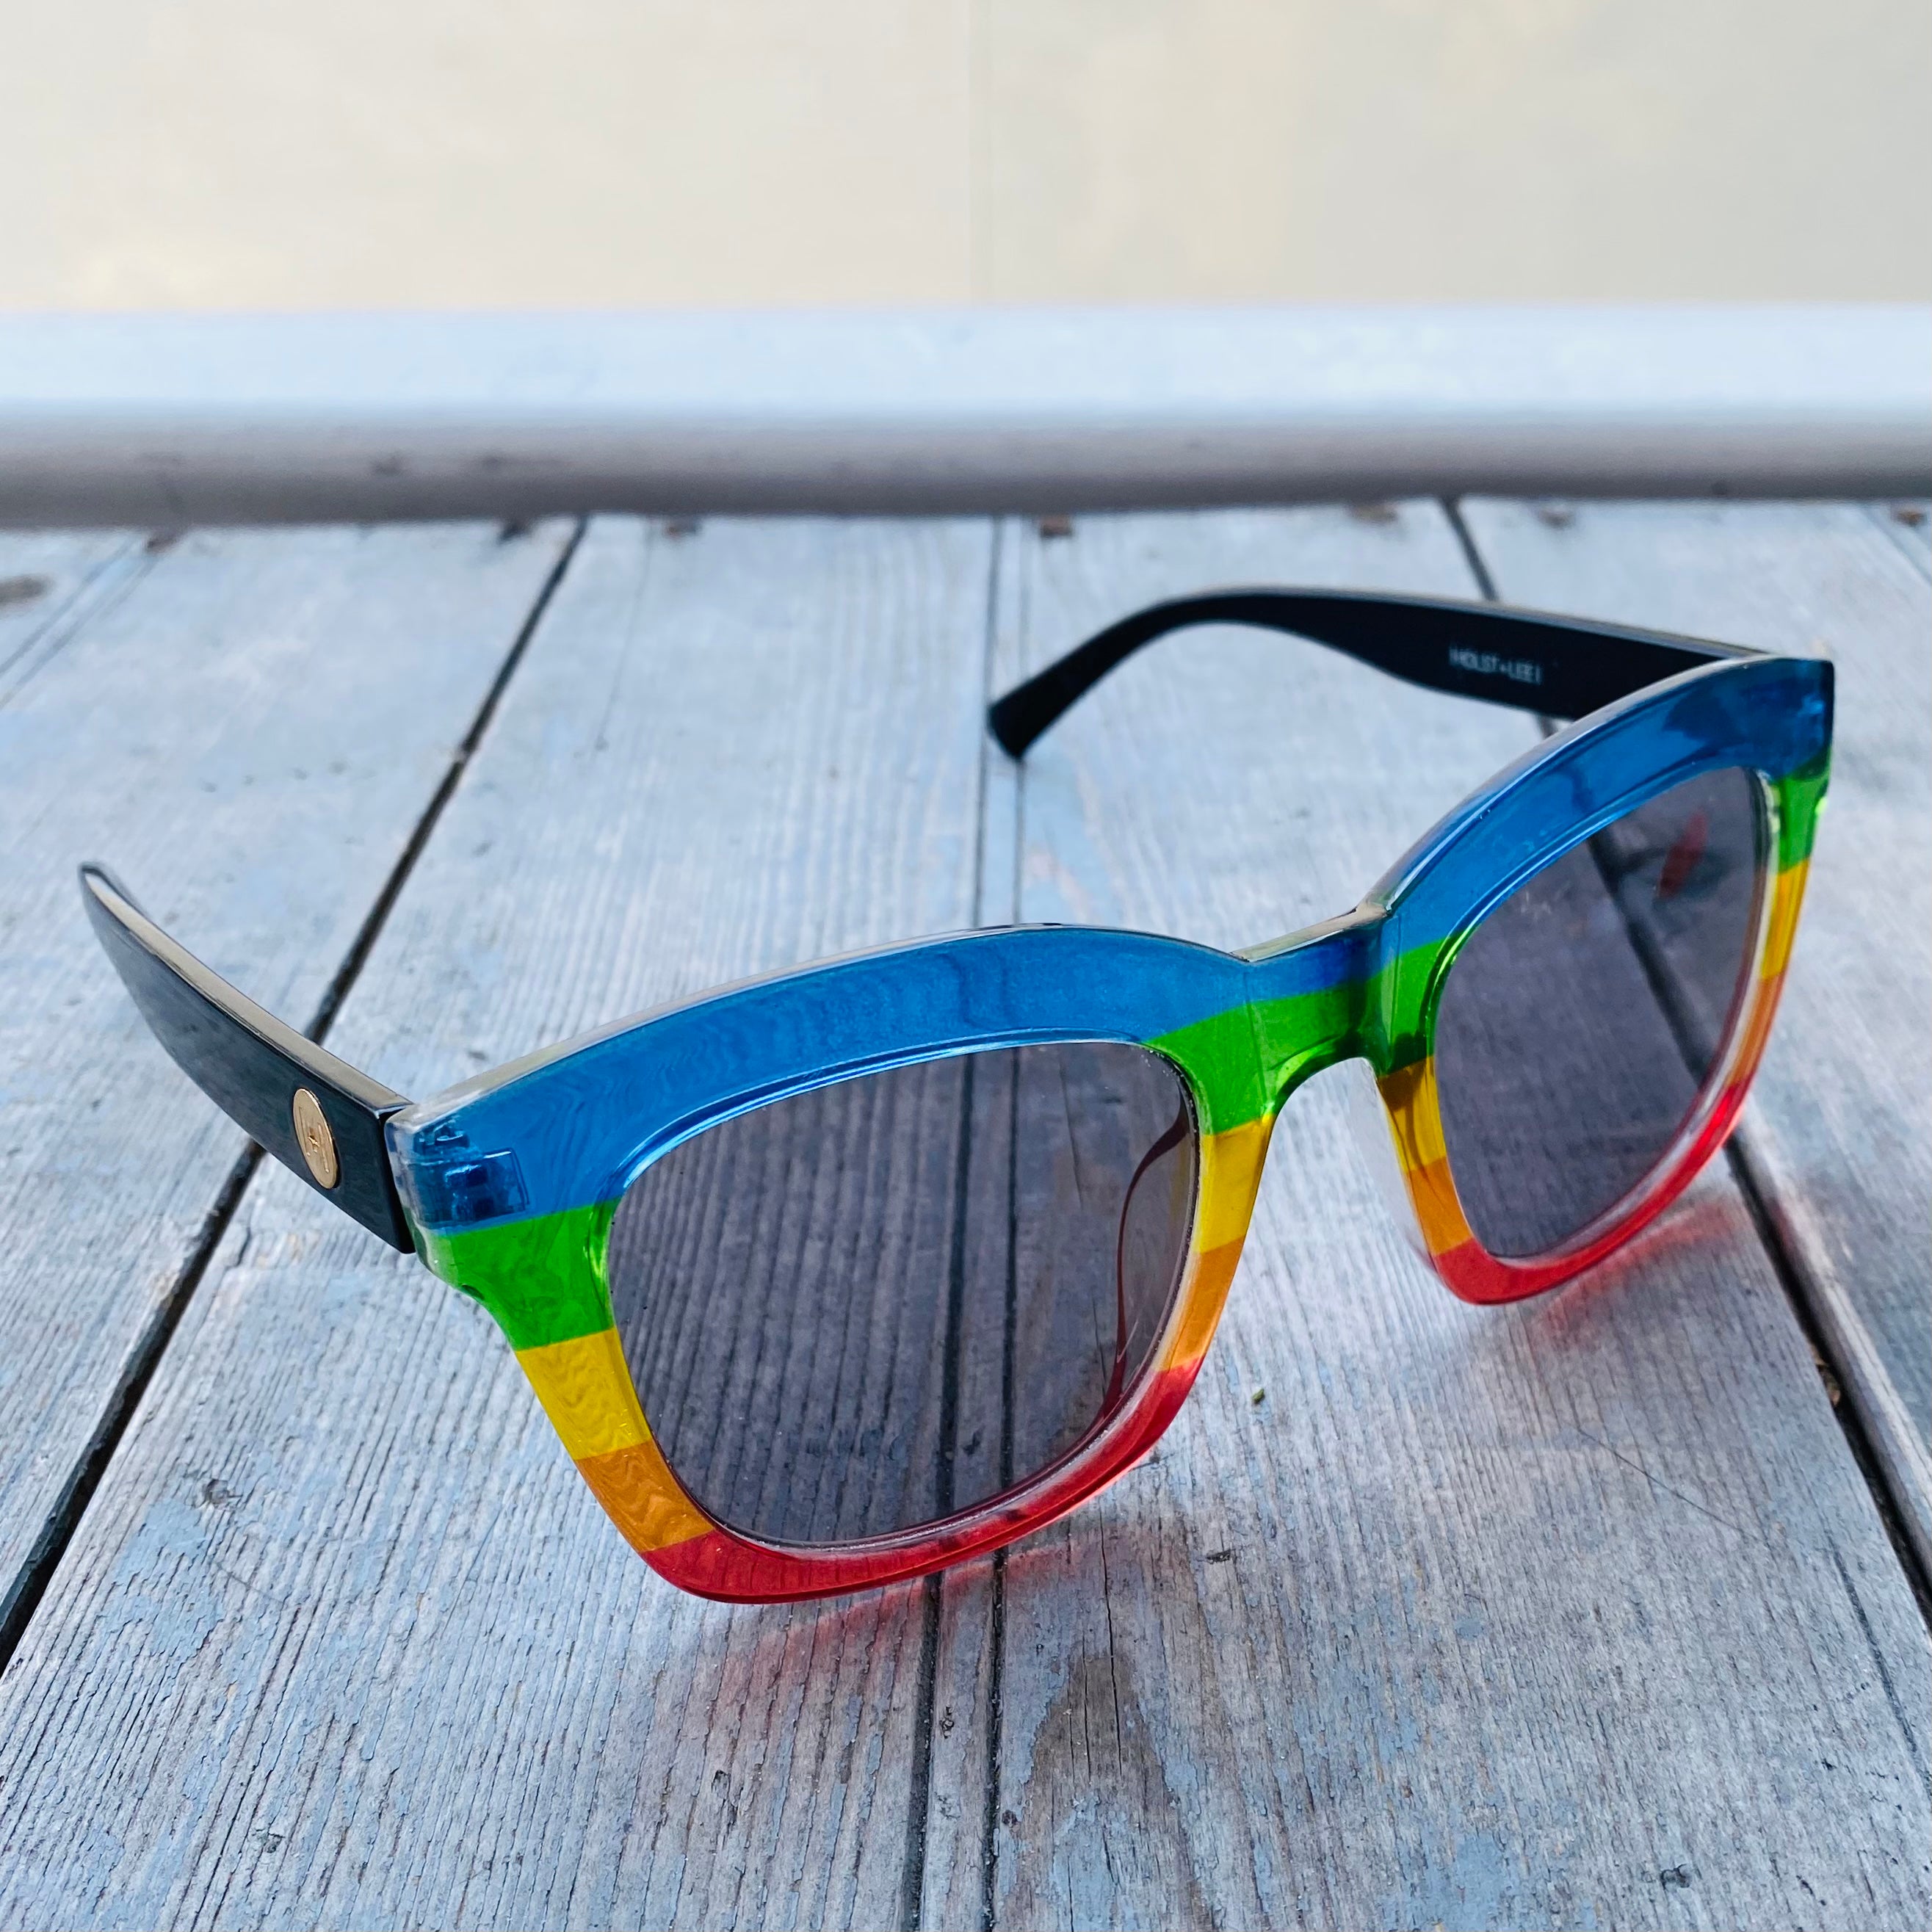 W-403-RAINB - Rainbow Sunglasses Wholesale - Frontier Fashion, Inc.